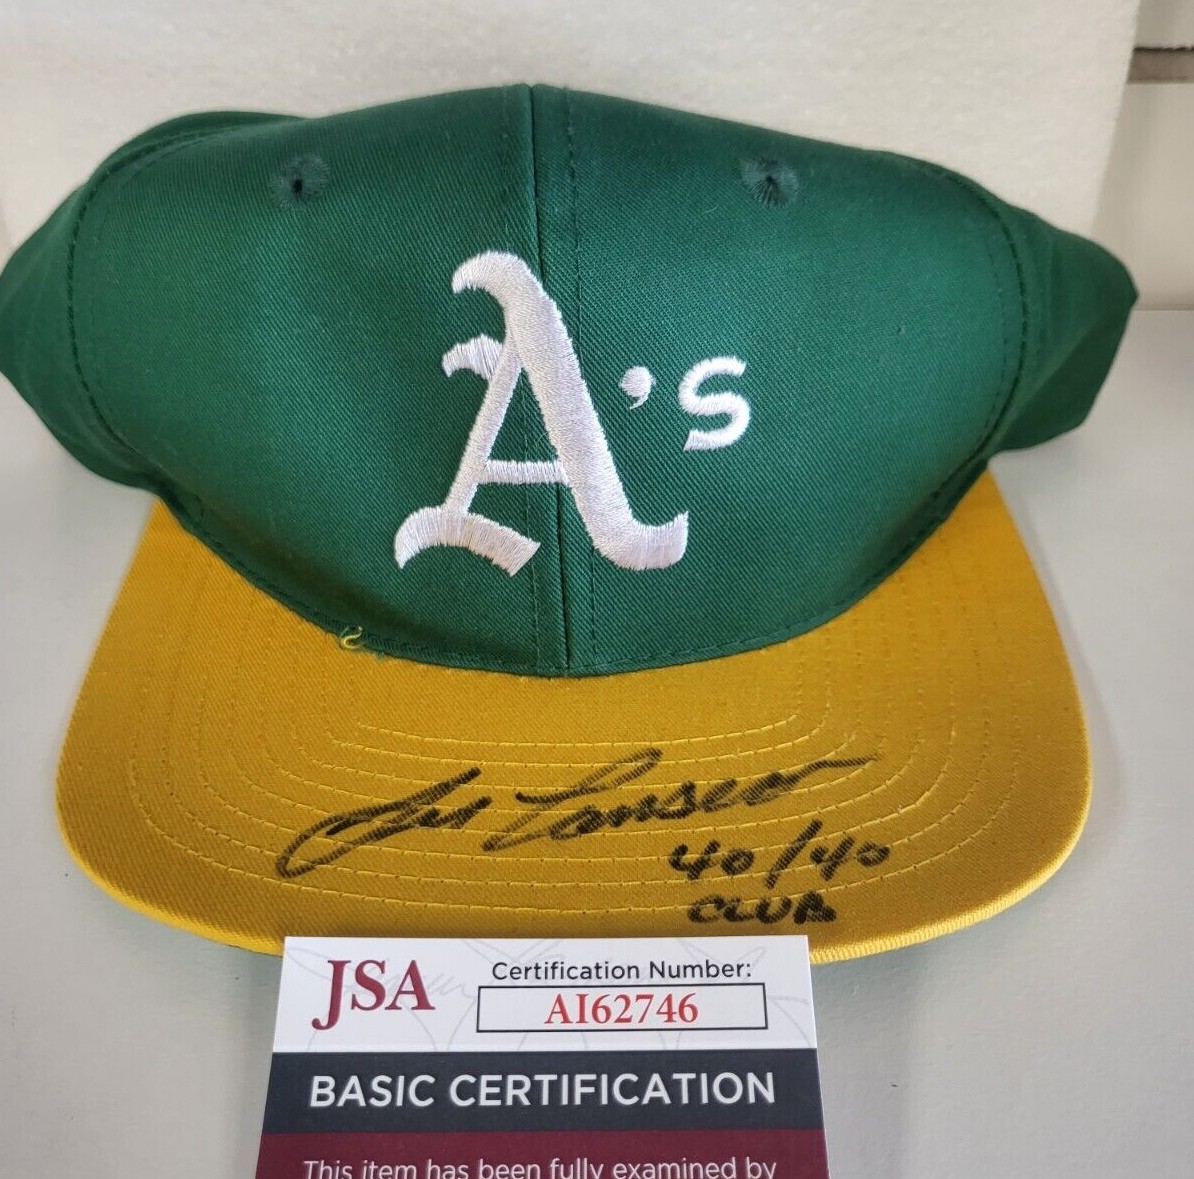 Autographed/Signed Jose Canseco Oakland Yellow Baseball Jersey JSA